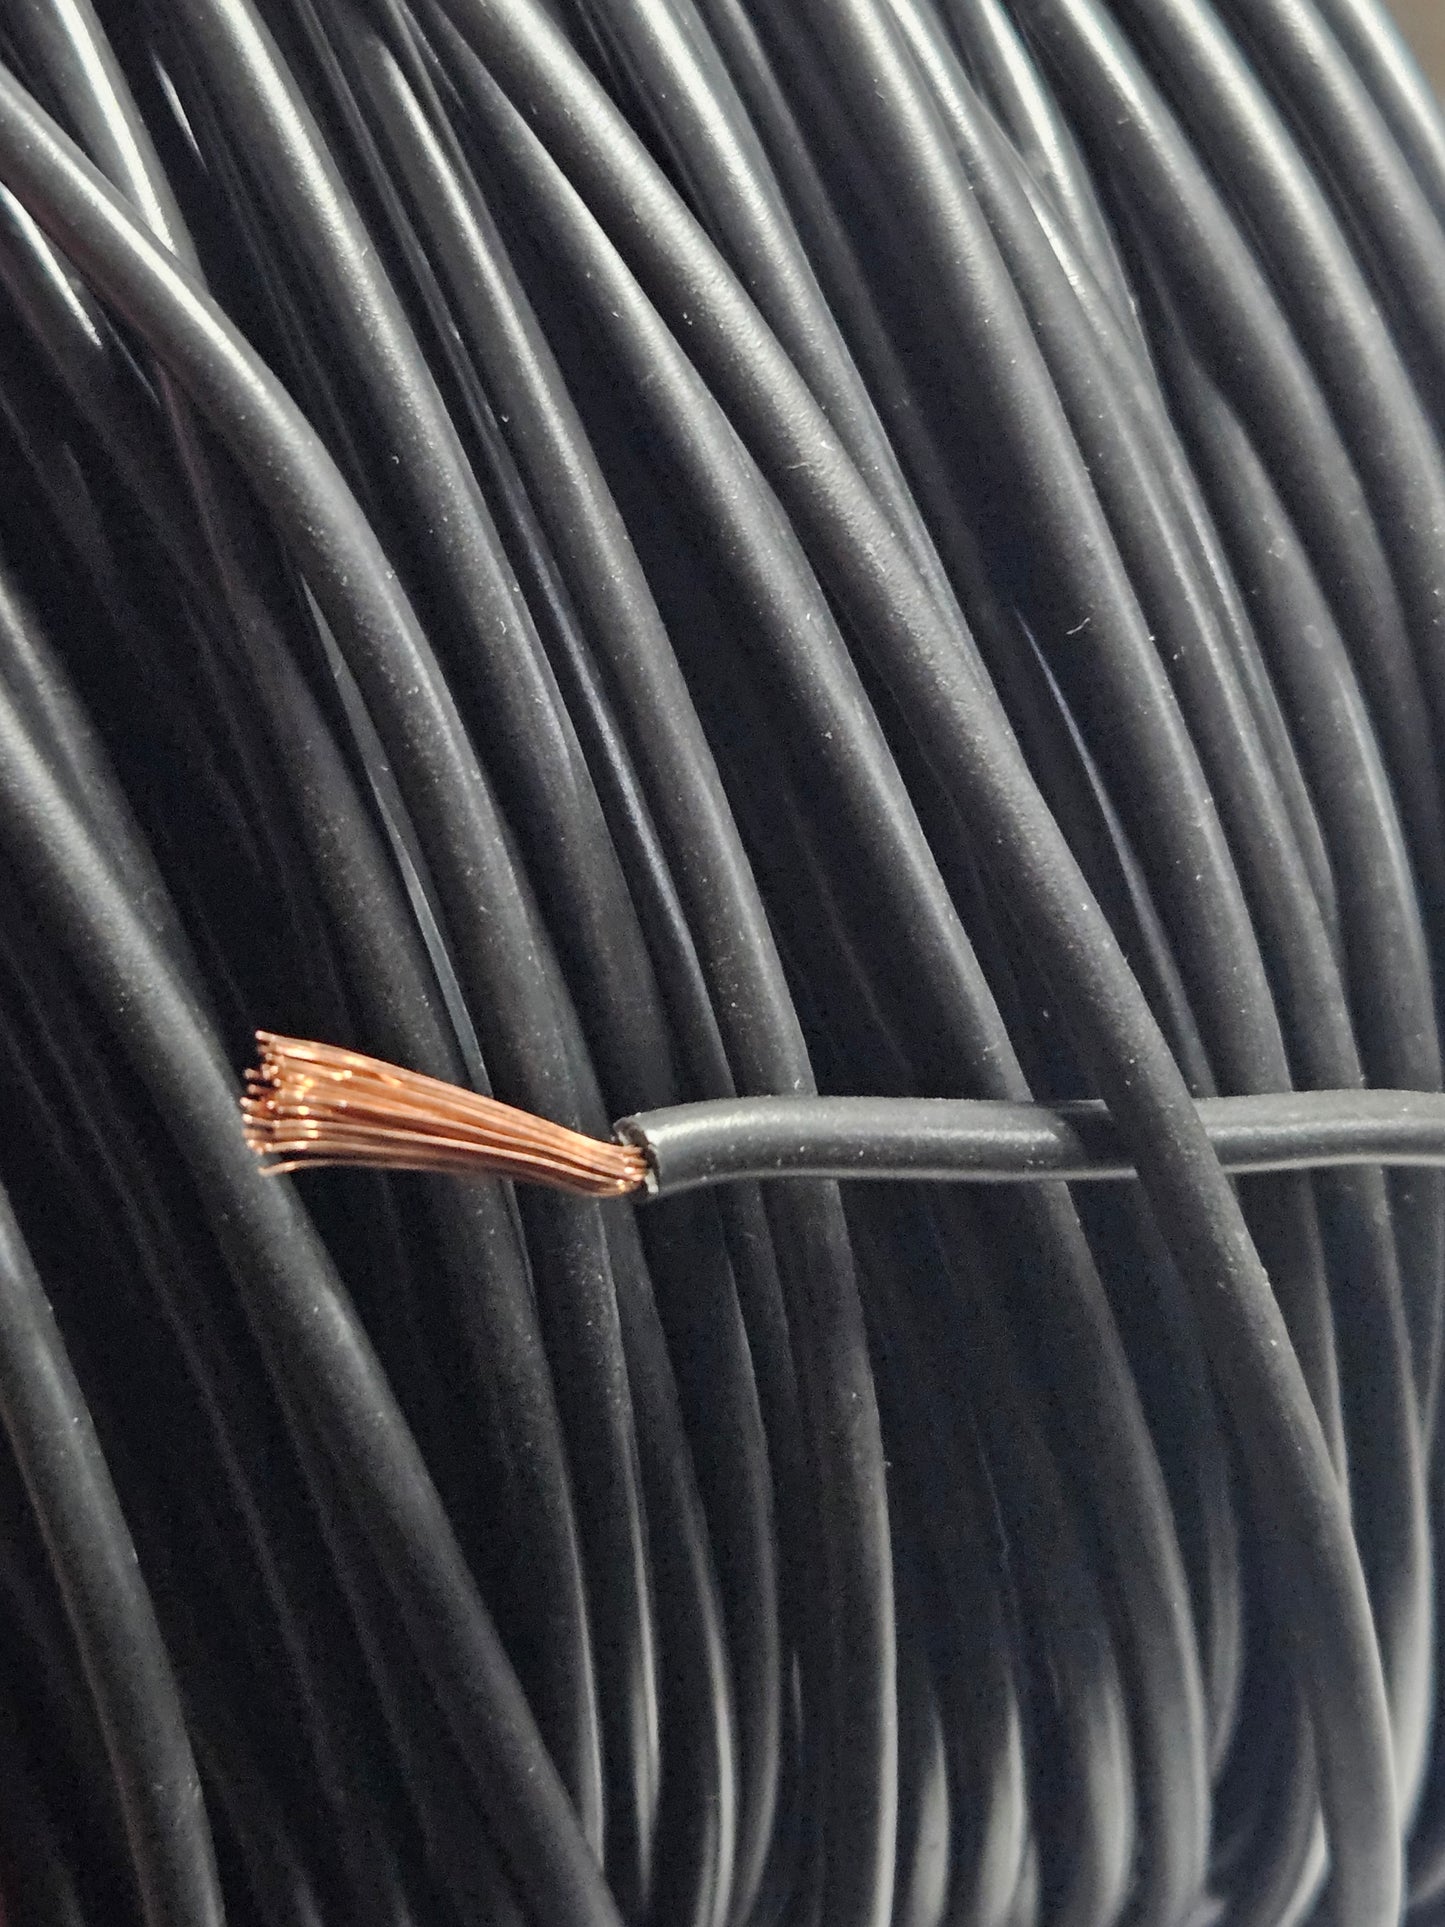 Cable THW eléctrico automotriz unipolar | Rollo de cable de un polo Varios calibres